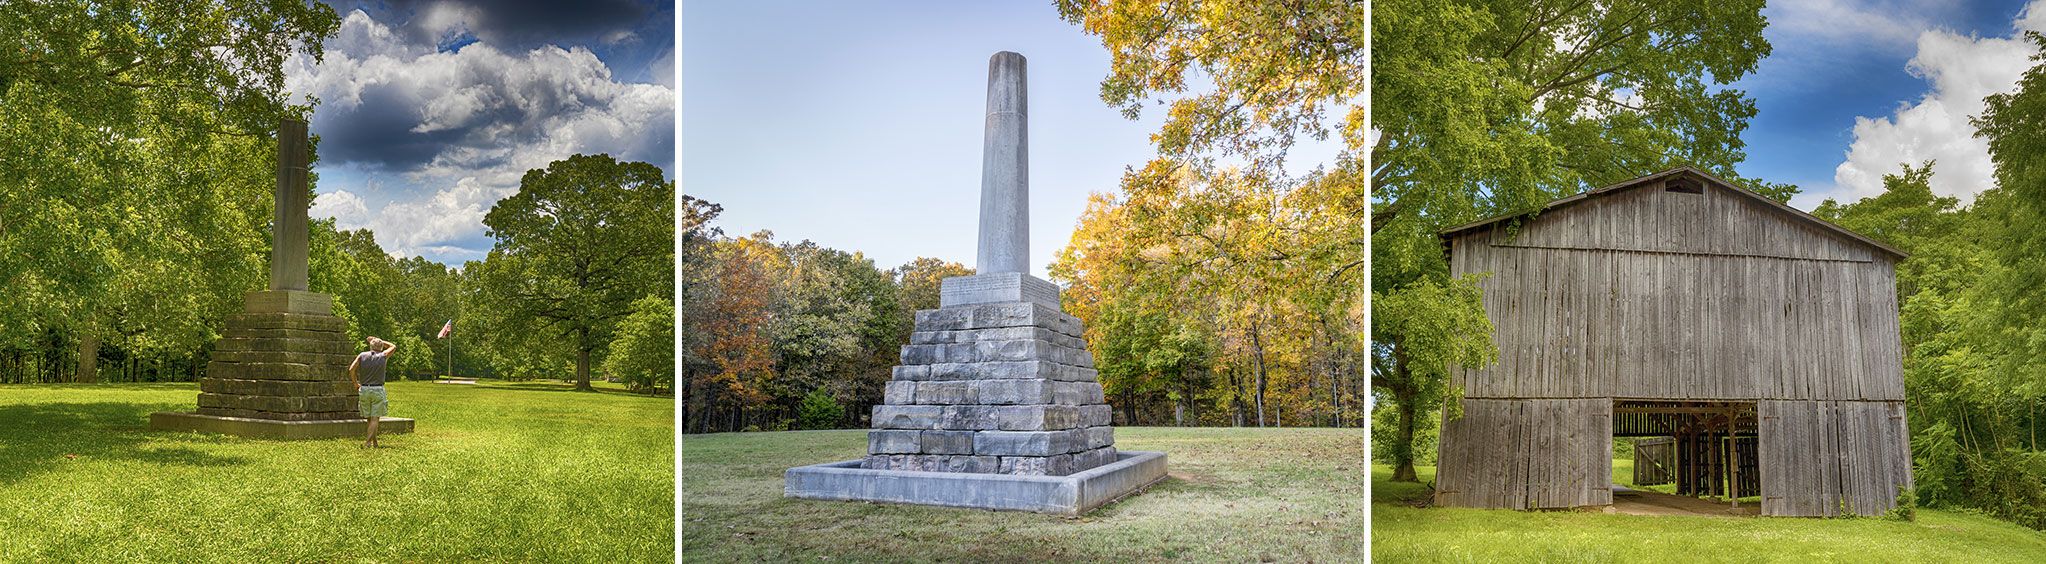 Meriwether Lewis Monument near Nashville, TN